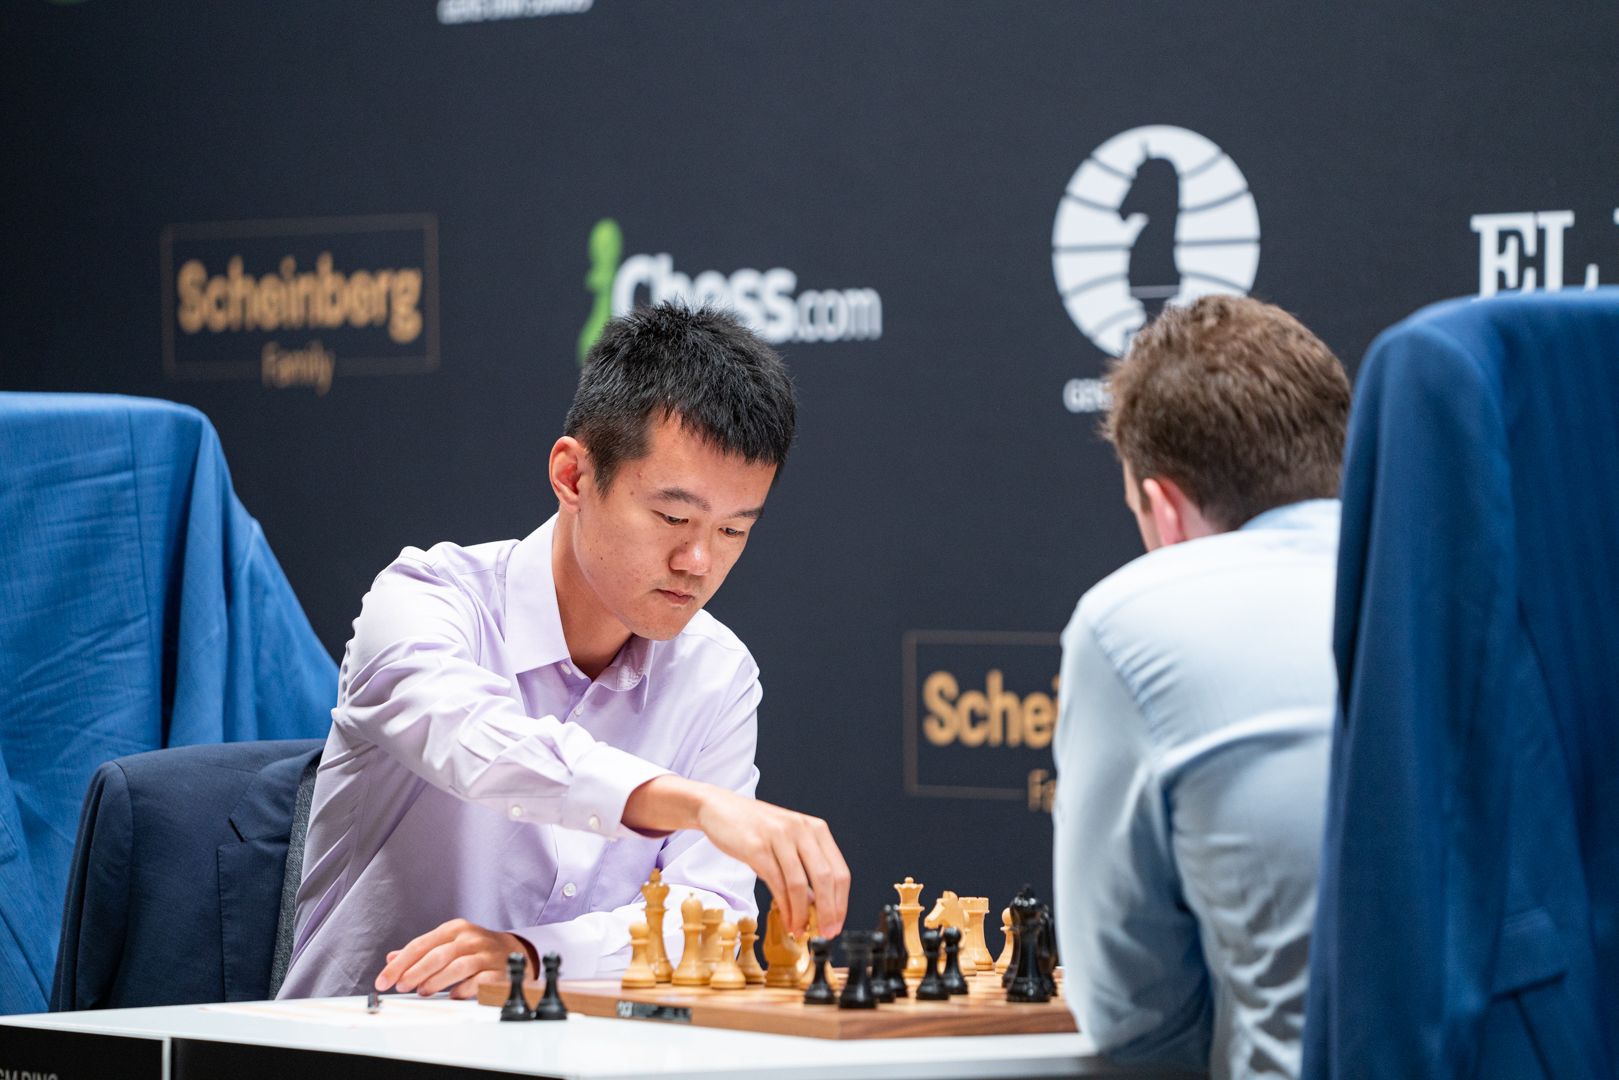 Twitter Frenemies Carlsen, Giri Meet In Chessable Masters Final 